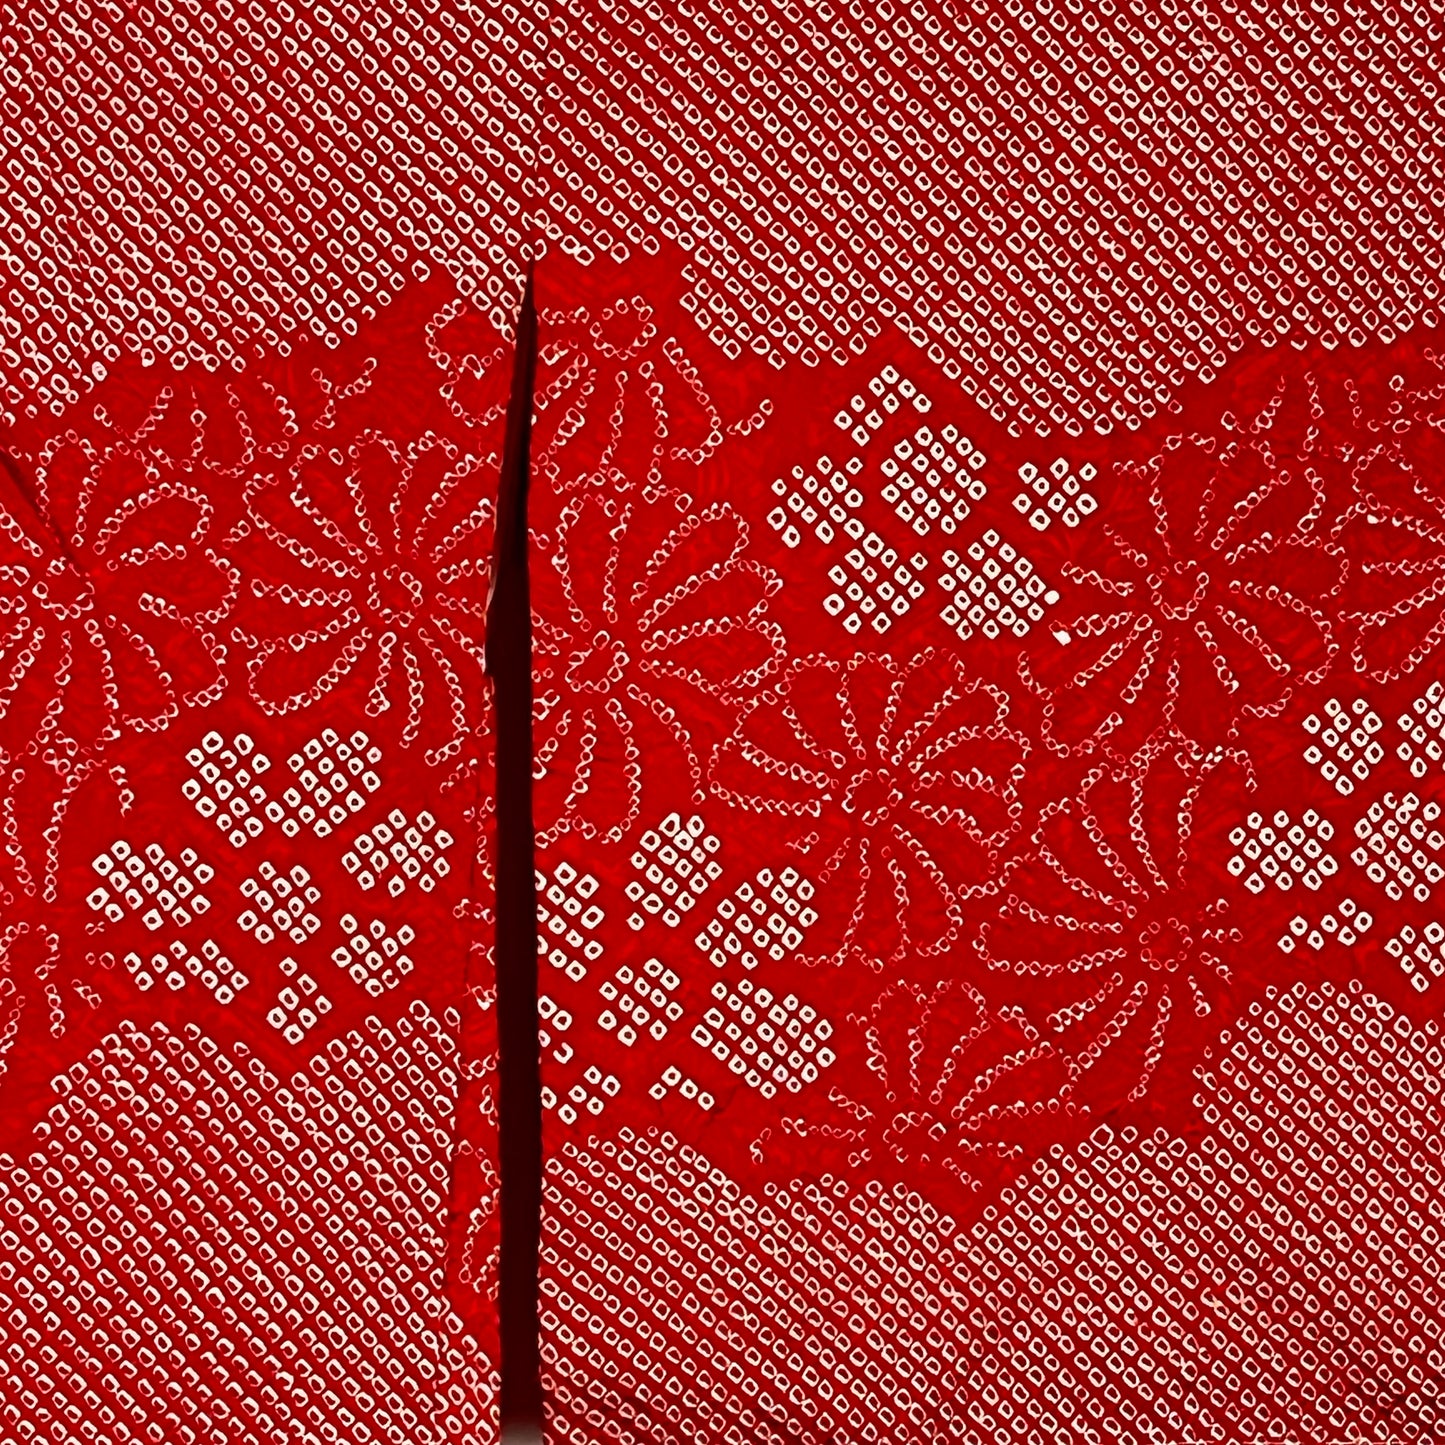 Vintage Japanese Silk Haori Coat in Shibori Tie-dye Bright Red Flower Pattern 28"L